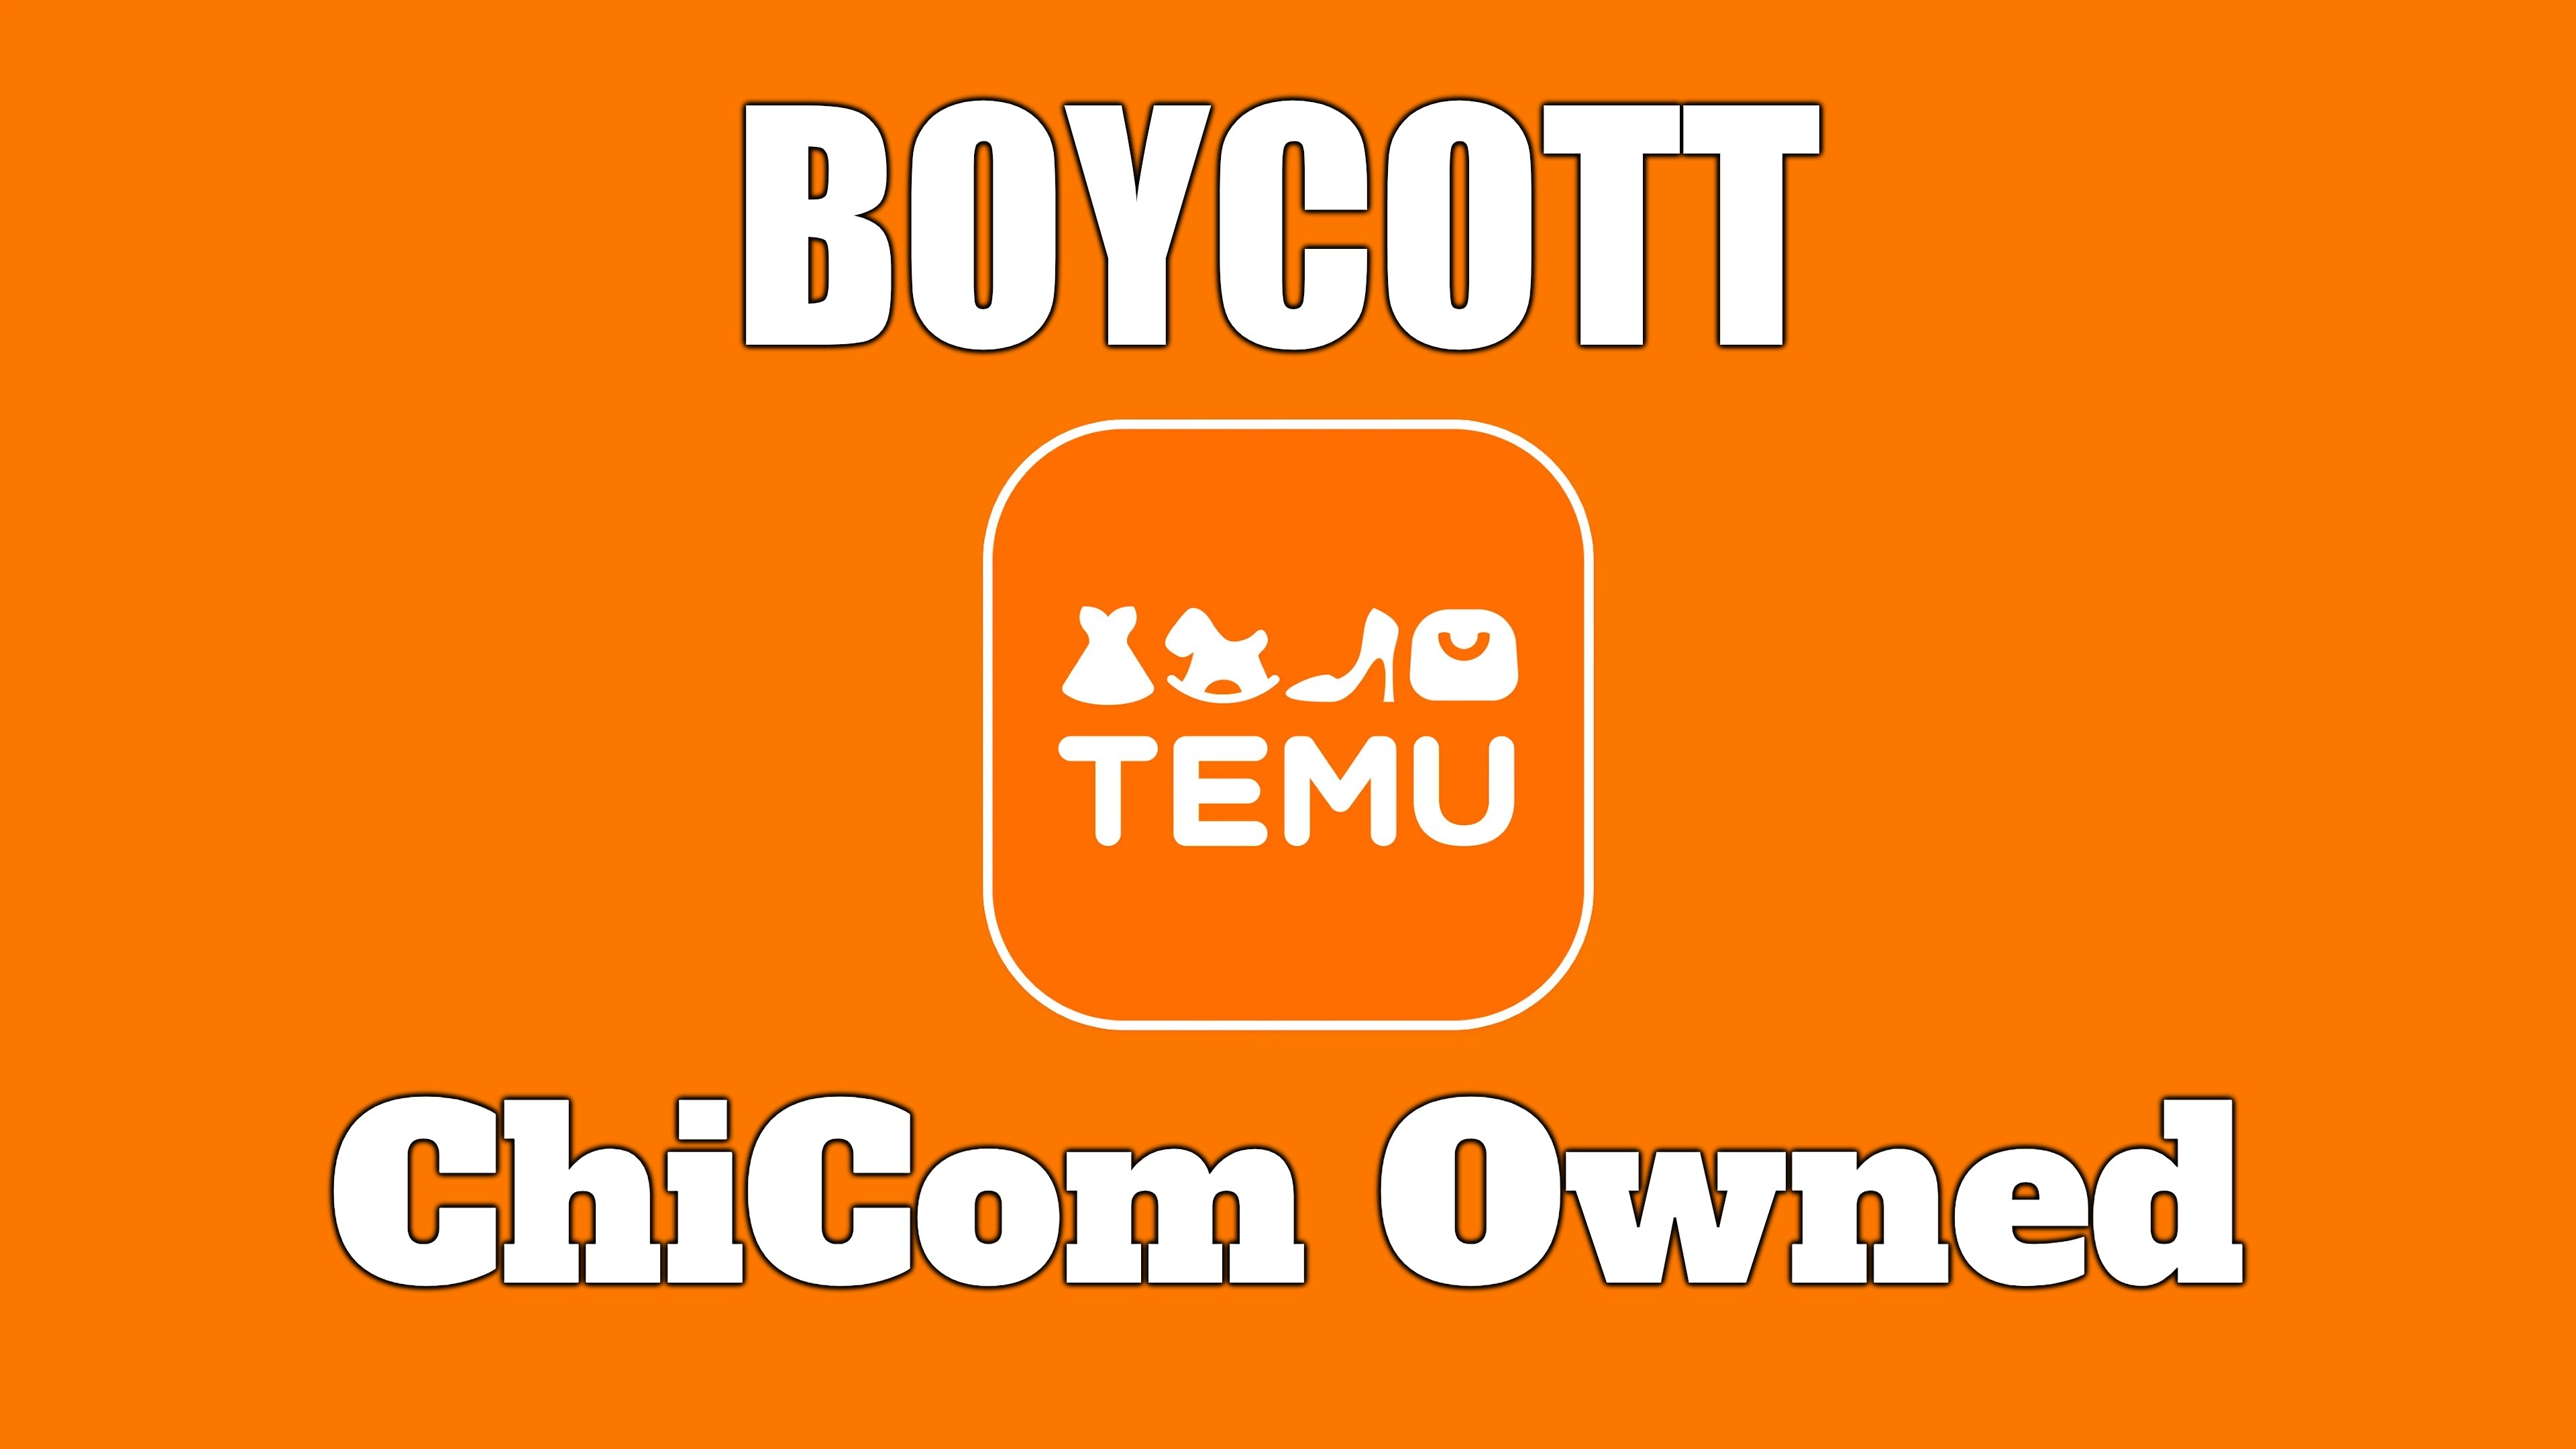 Boycott Temu! | image tagged in boycott,temu,chicoms,ccp,poor quality,espionage | made w/ Imgflip meme maker